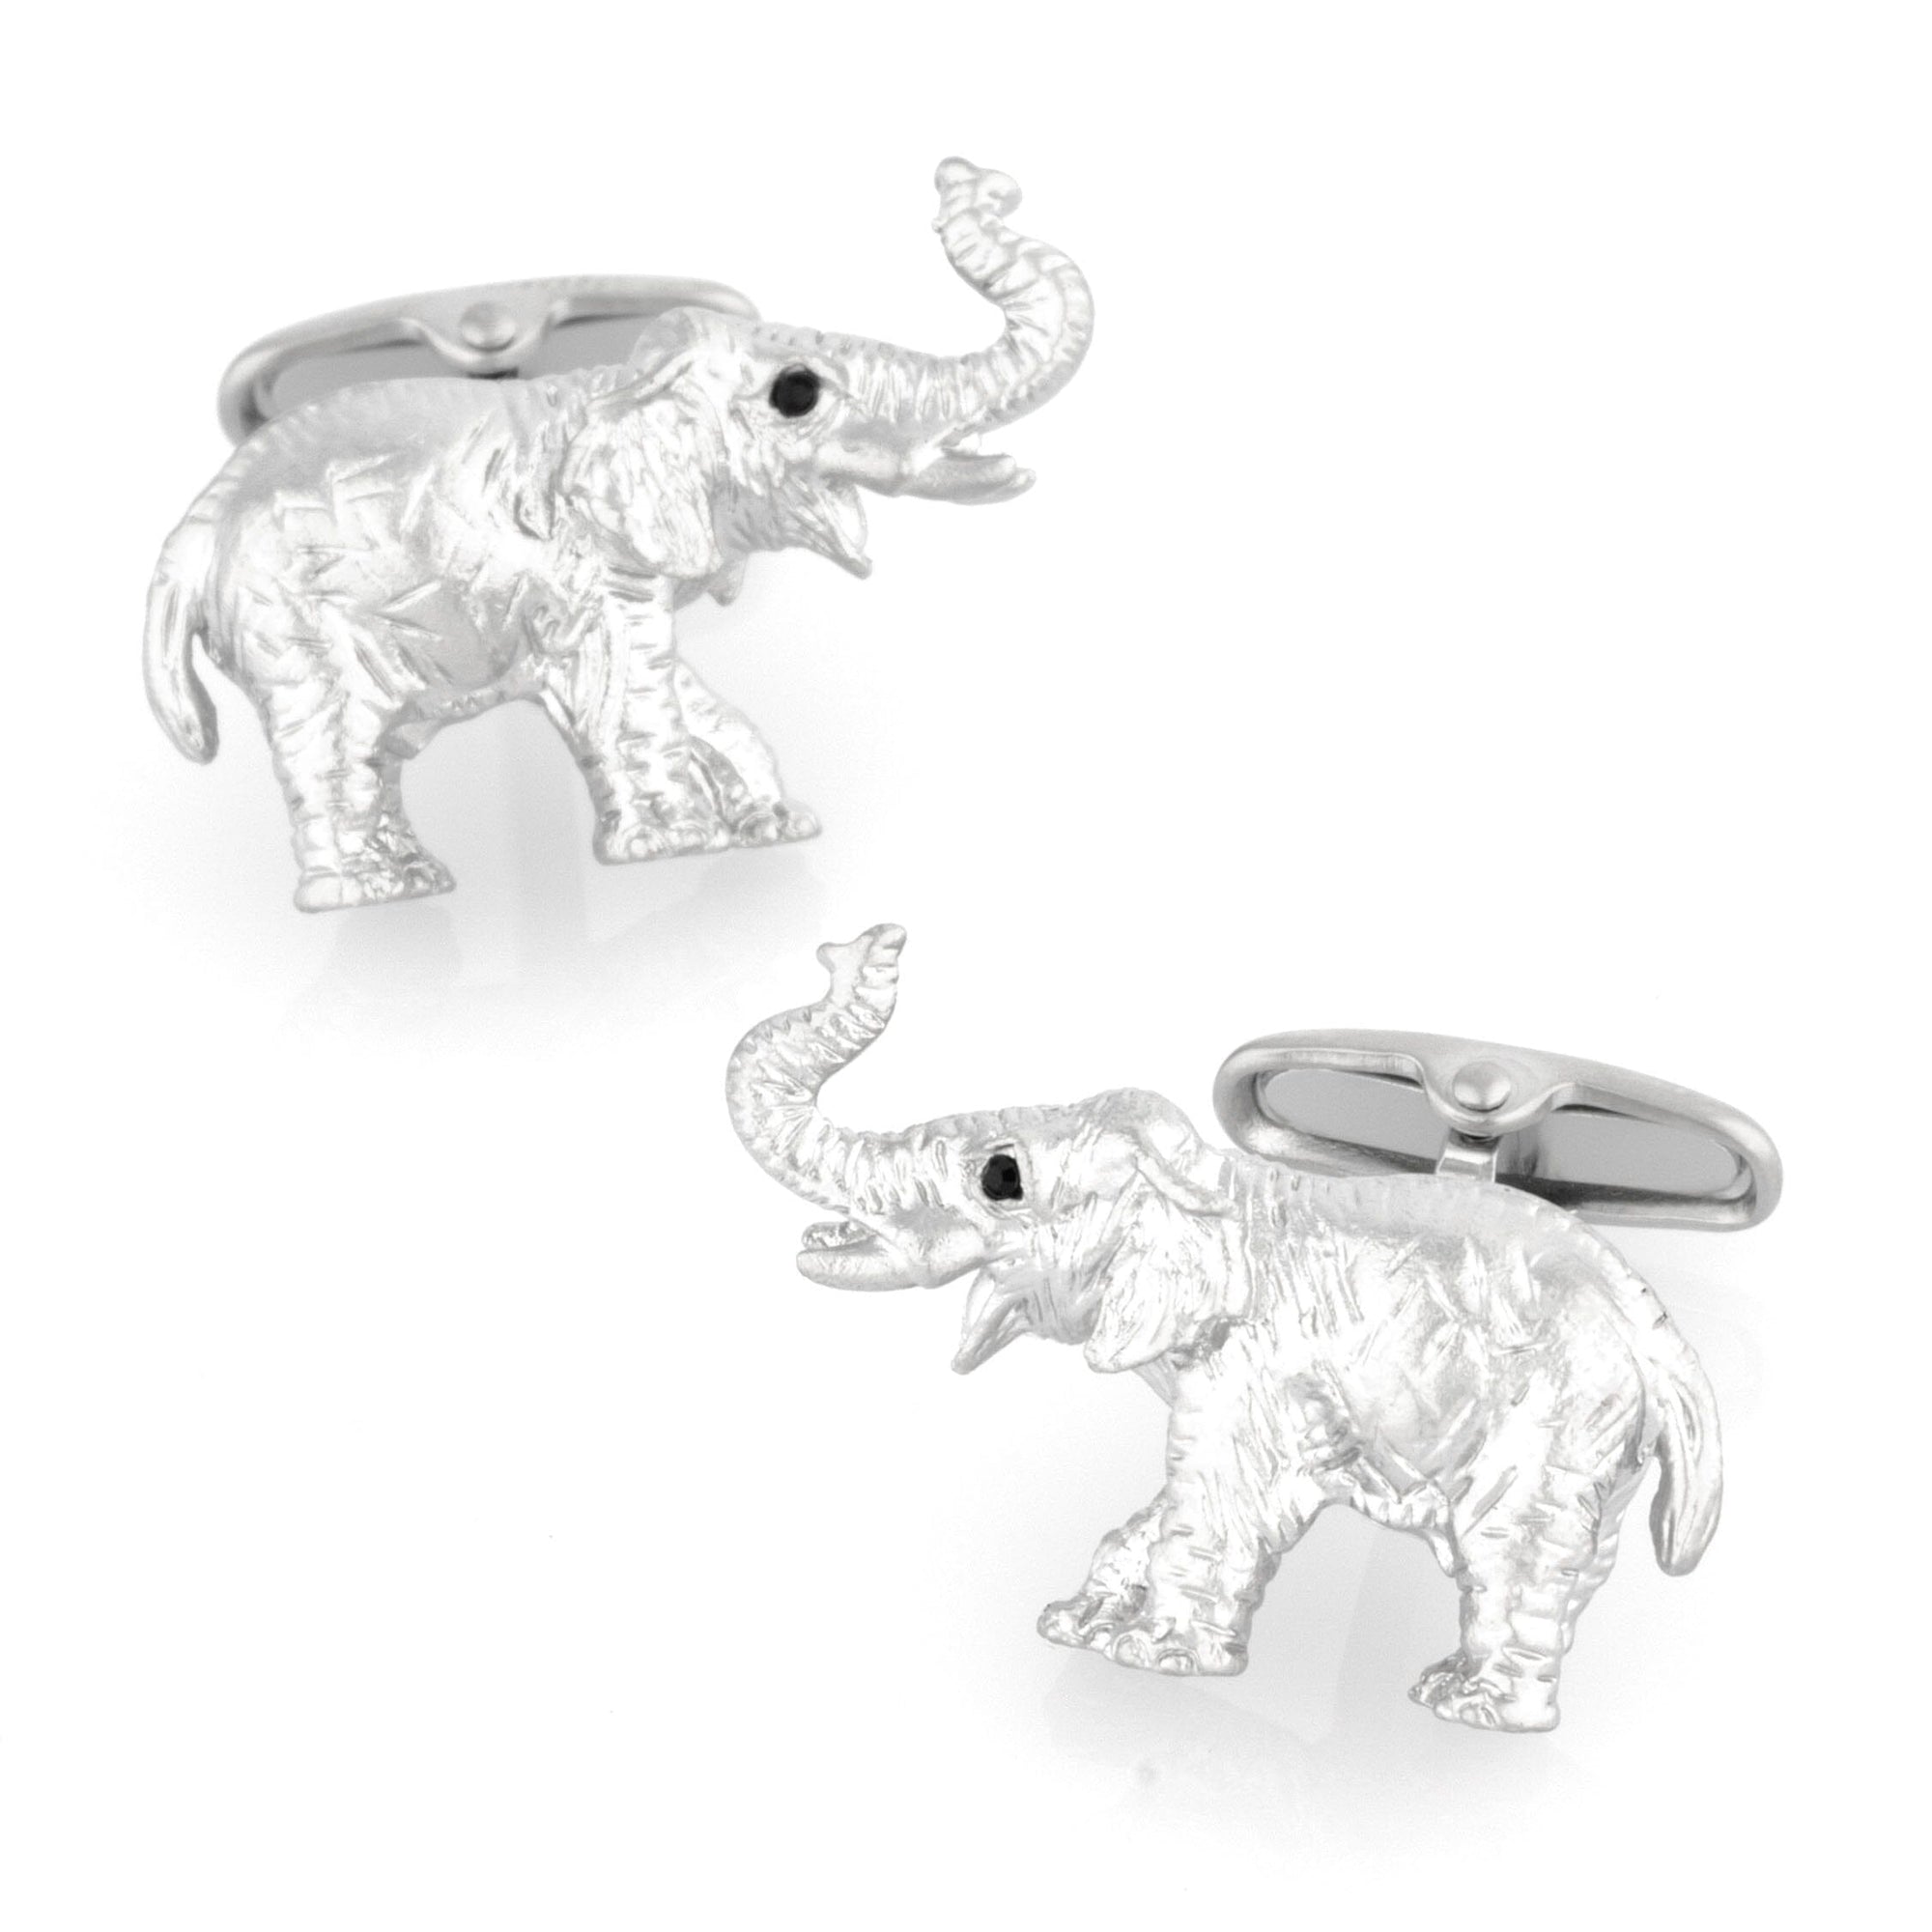 Brushed Silver Elephant Cufflinks Novelty Cufflinks Clinks Australia Brushed Silver Elephant Cufflinks 